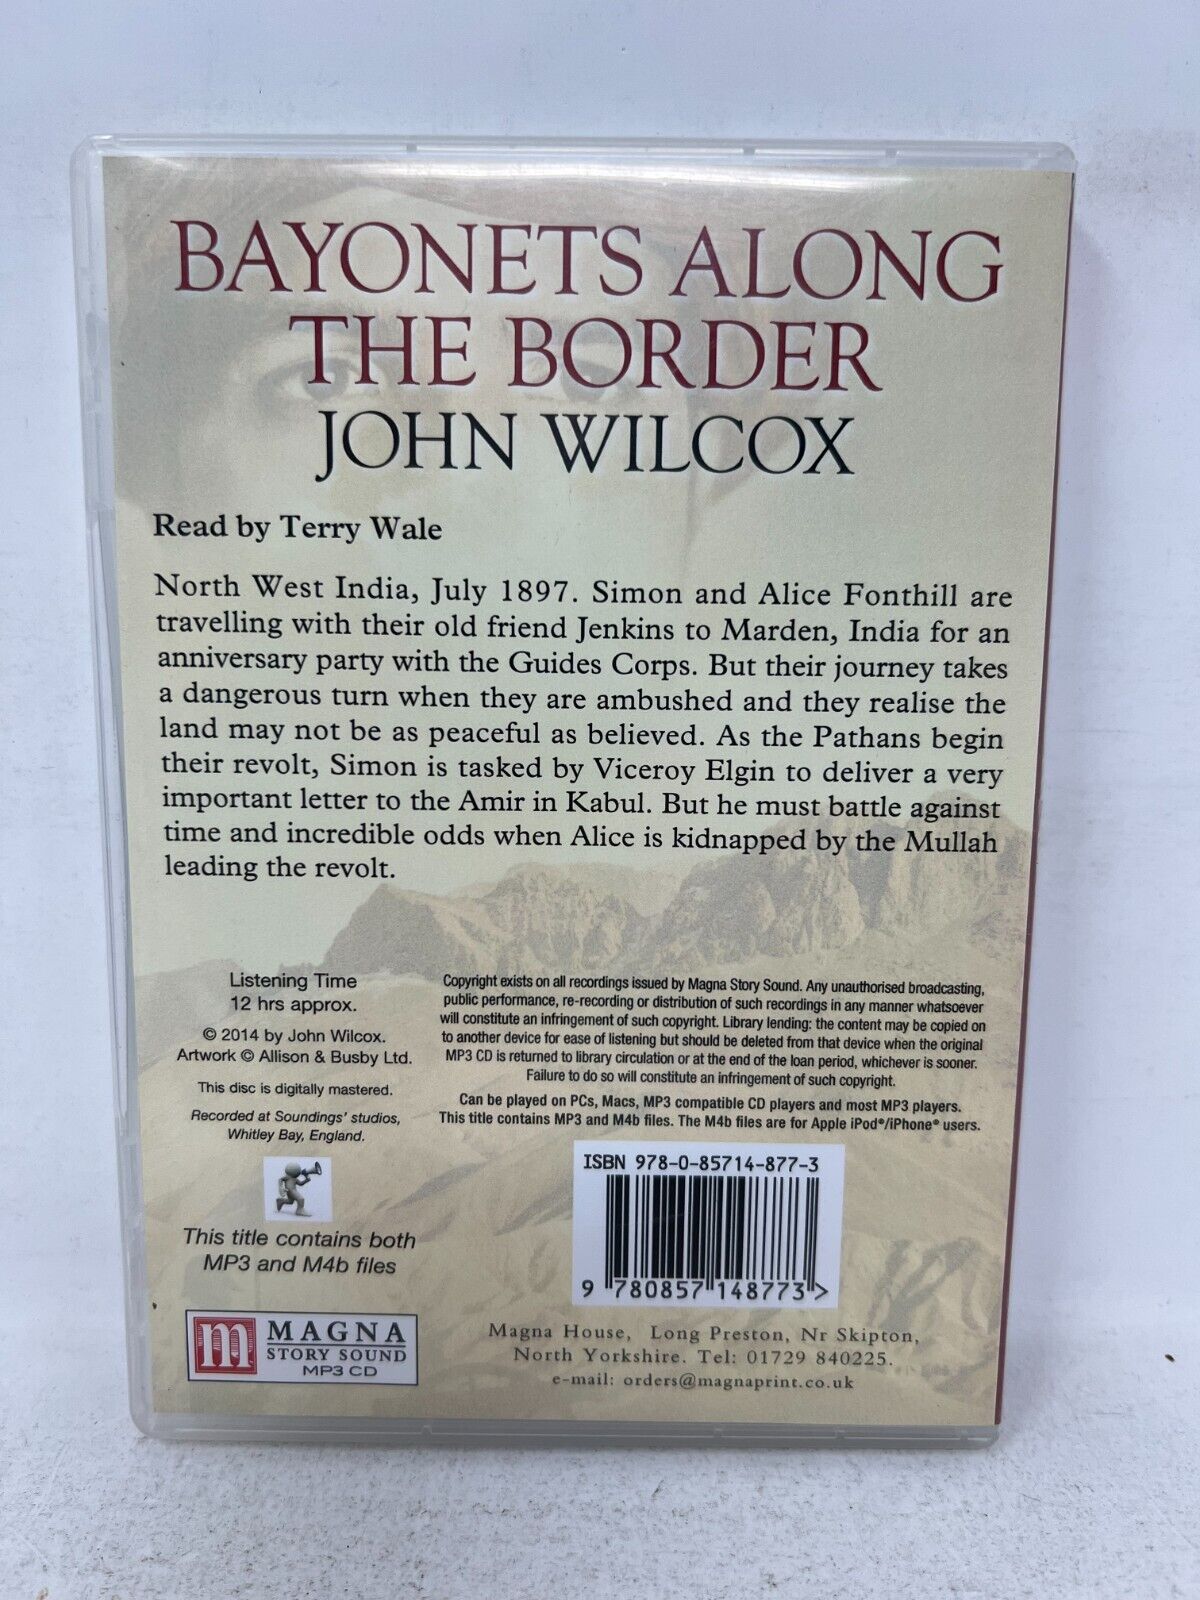 Bayonets Along the Border (CD) Story Sound Mp3 CD Audiobook John Wilcox